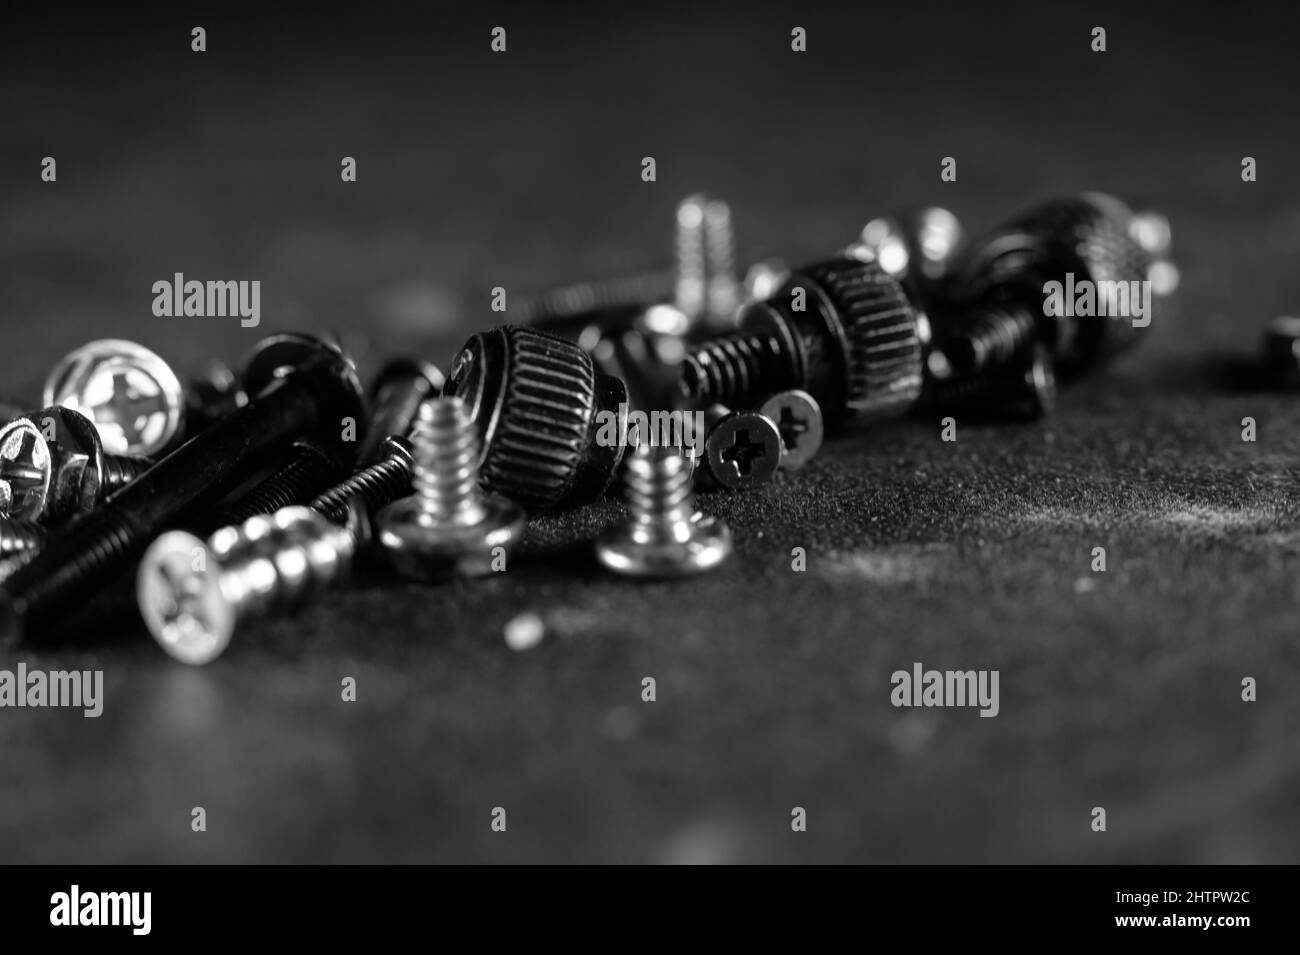 Grayscale shot of screws Stock Photo